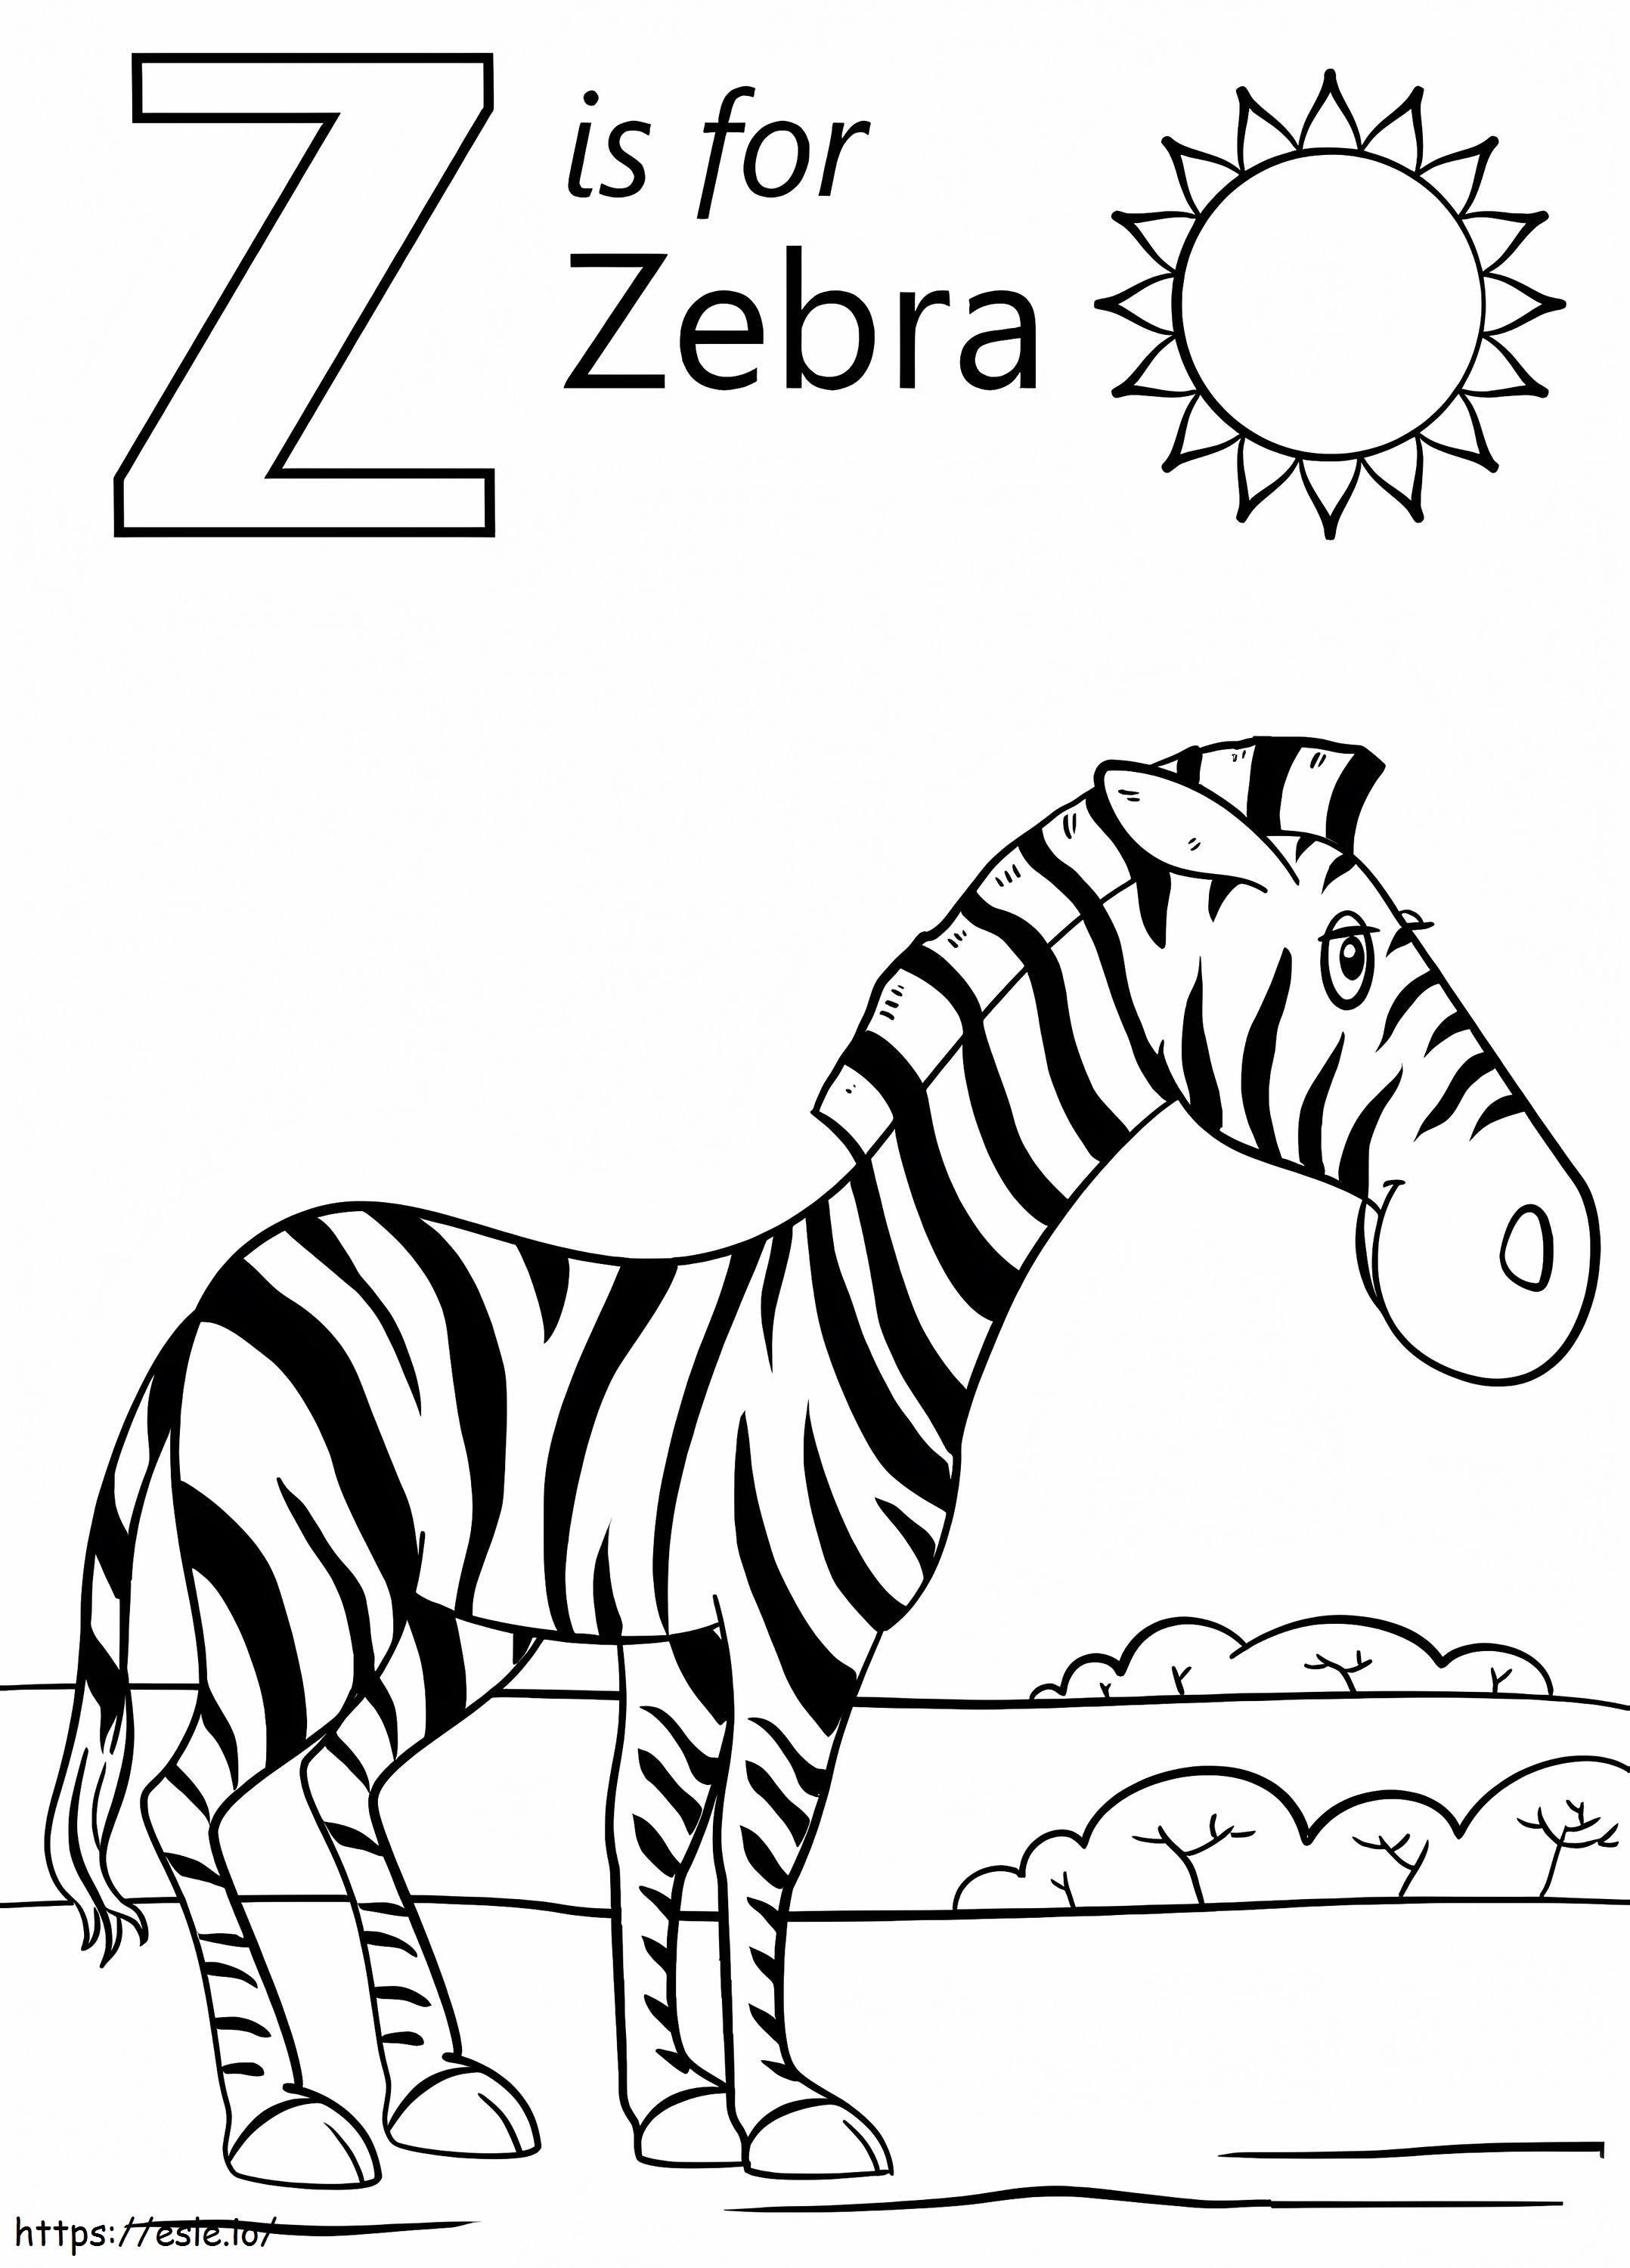 Zebra-Buchstabe Z ausmalbilder